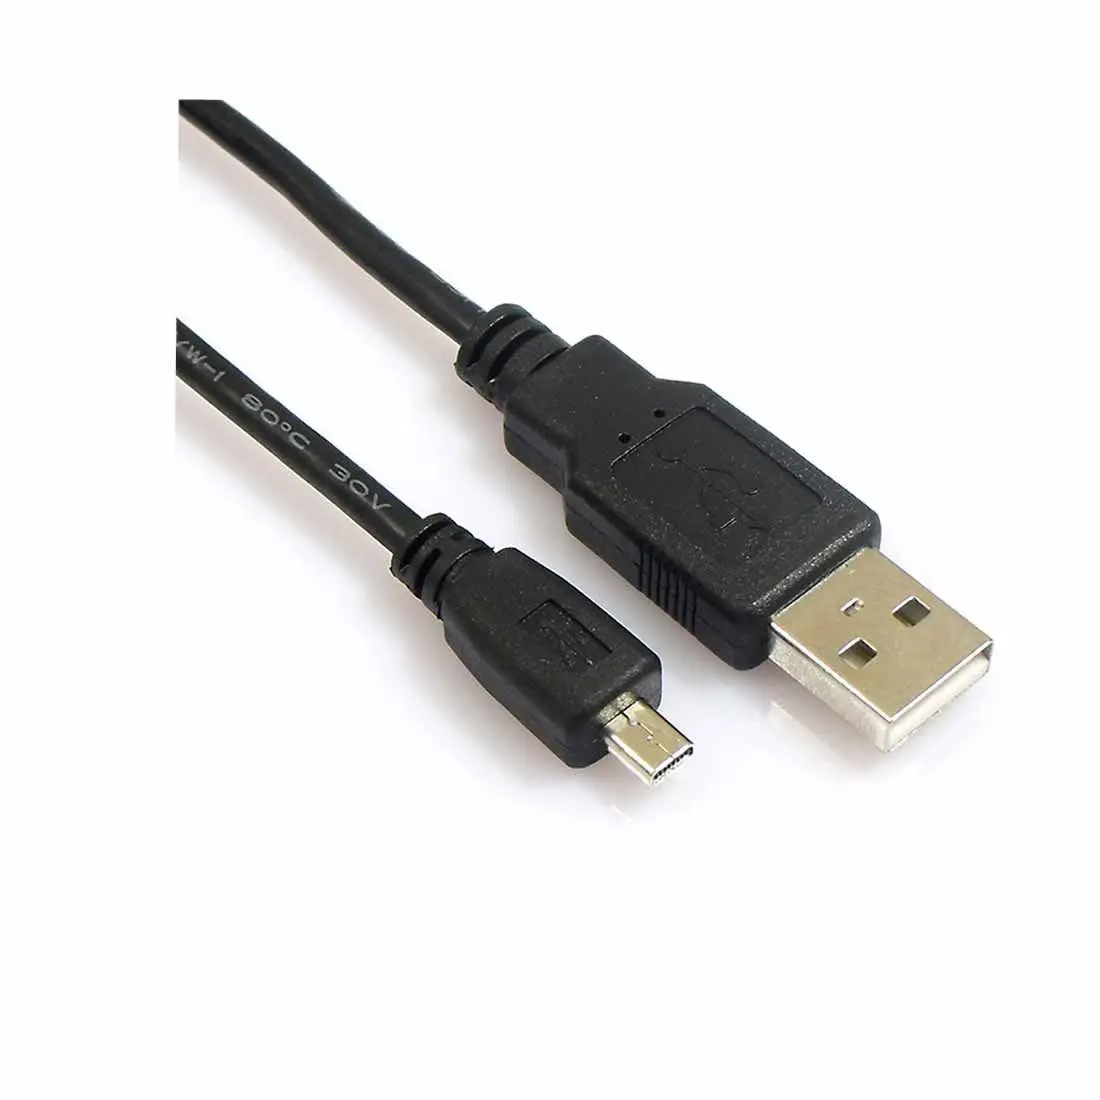 USB кабель для Nikon Coolpix D7100 D5300 D5200 D5100 D3300 D3200 S9500 UC E16 E17 S3100 S3000 S2 S31 S32 S2750 S2700 S230 S203|usb cable for